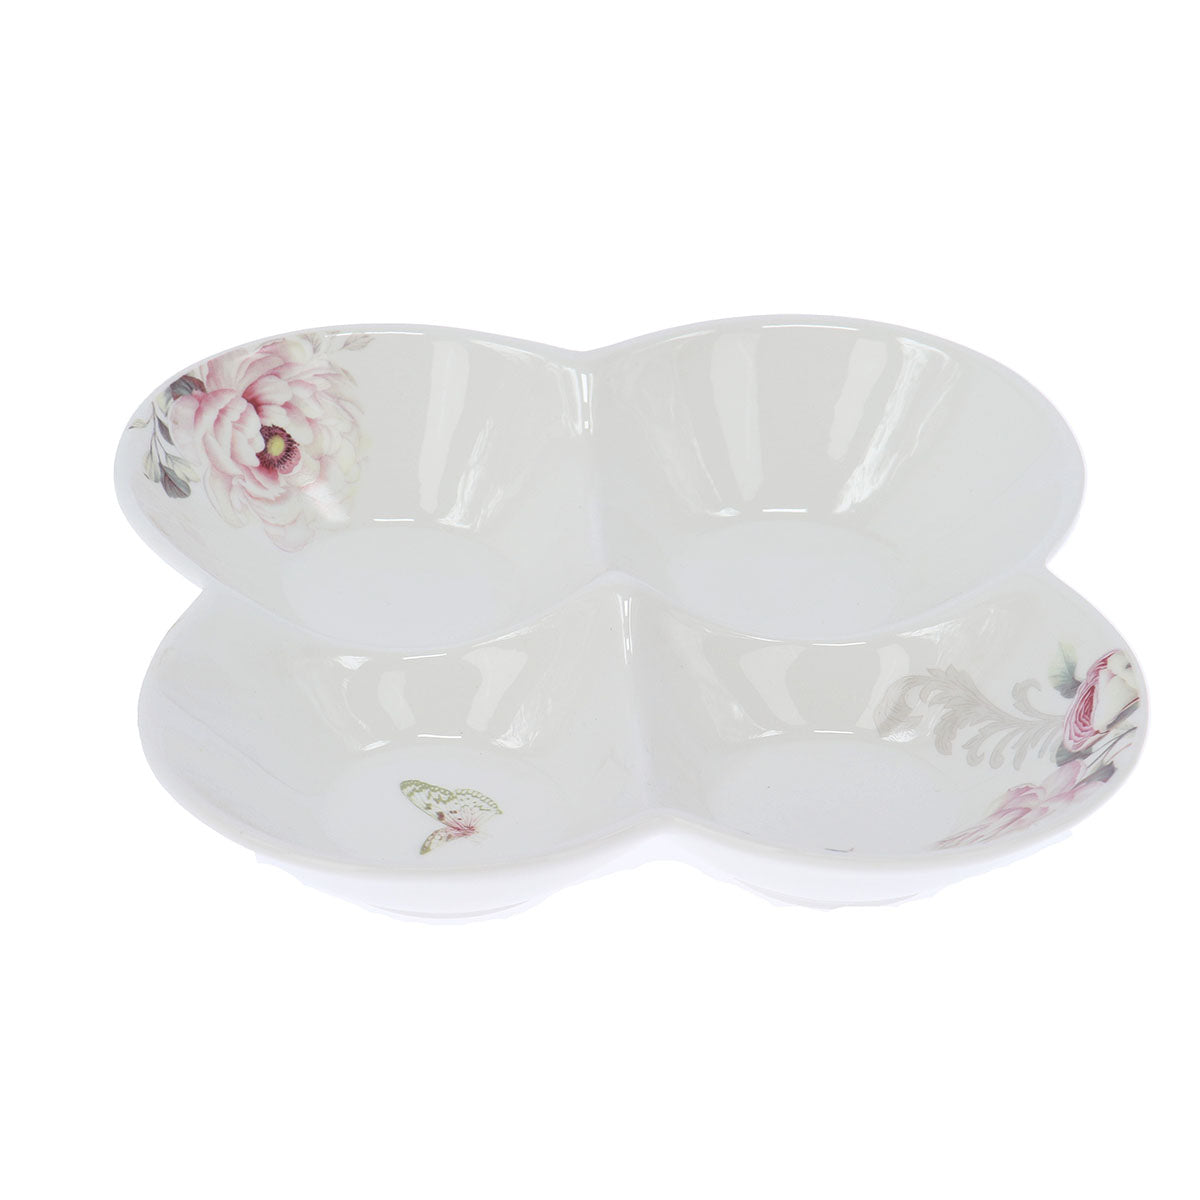 MegaEuro Tableware Fine Porcelain 57 Pcs